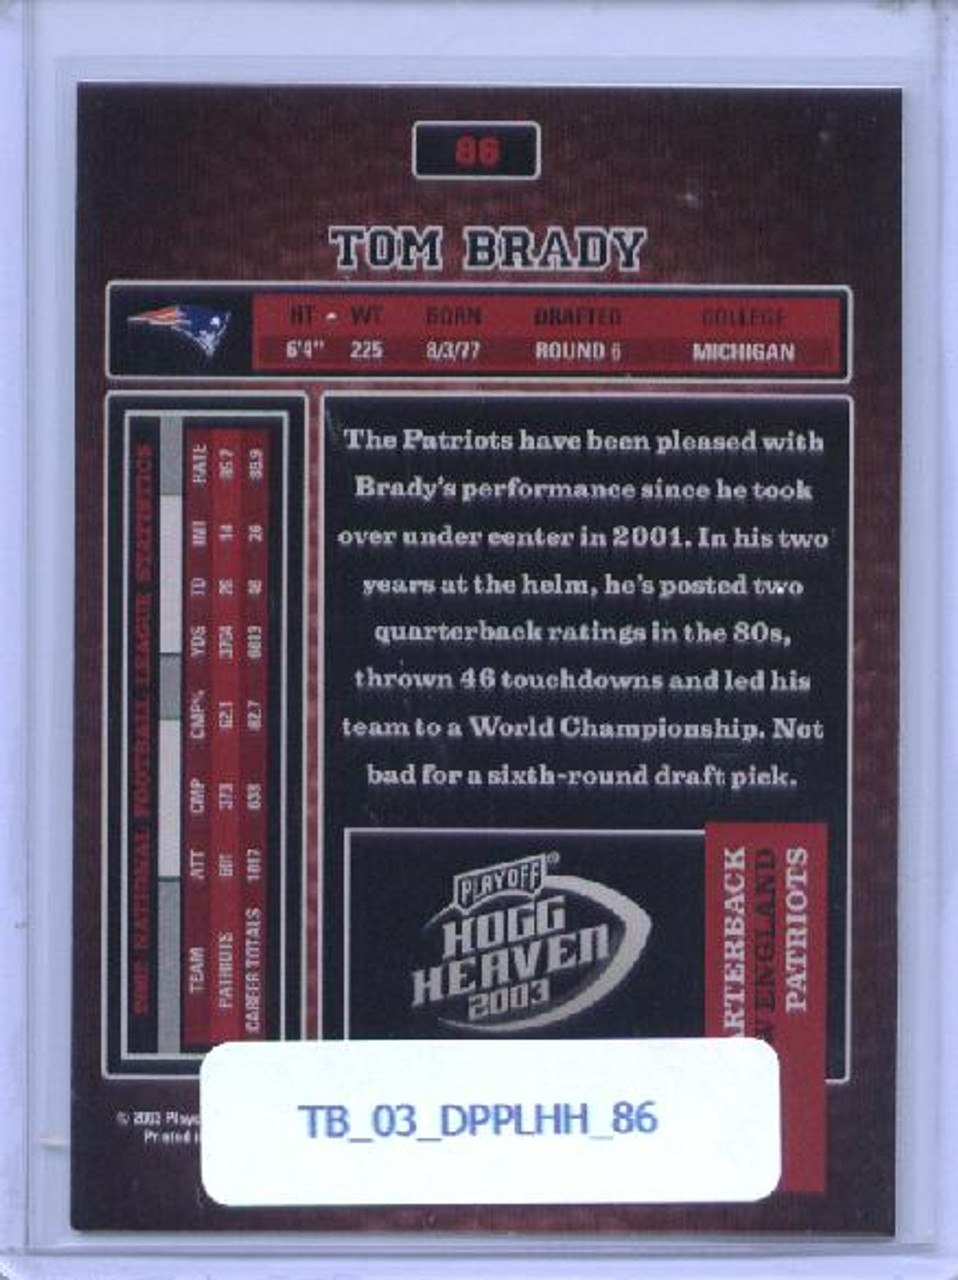 Tom Brady 2003 Playoff Hogg Heaven #86